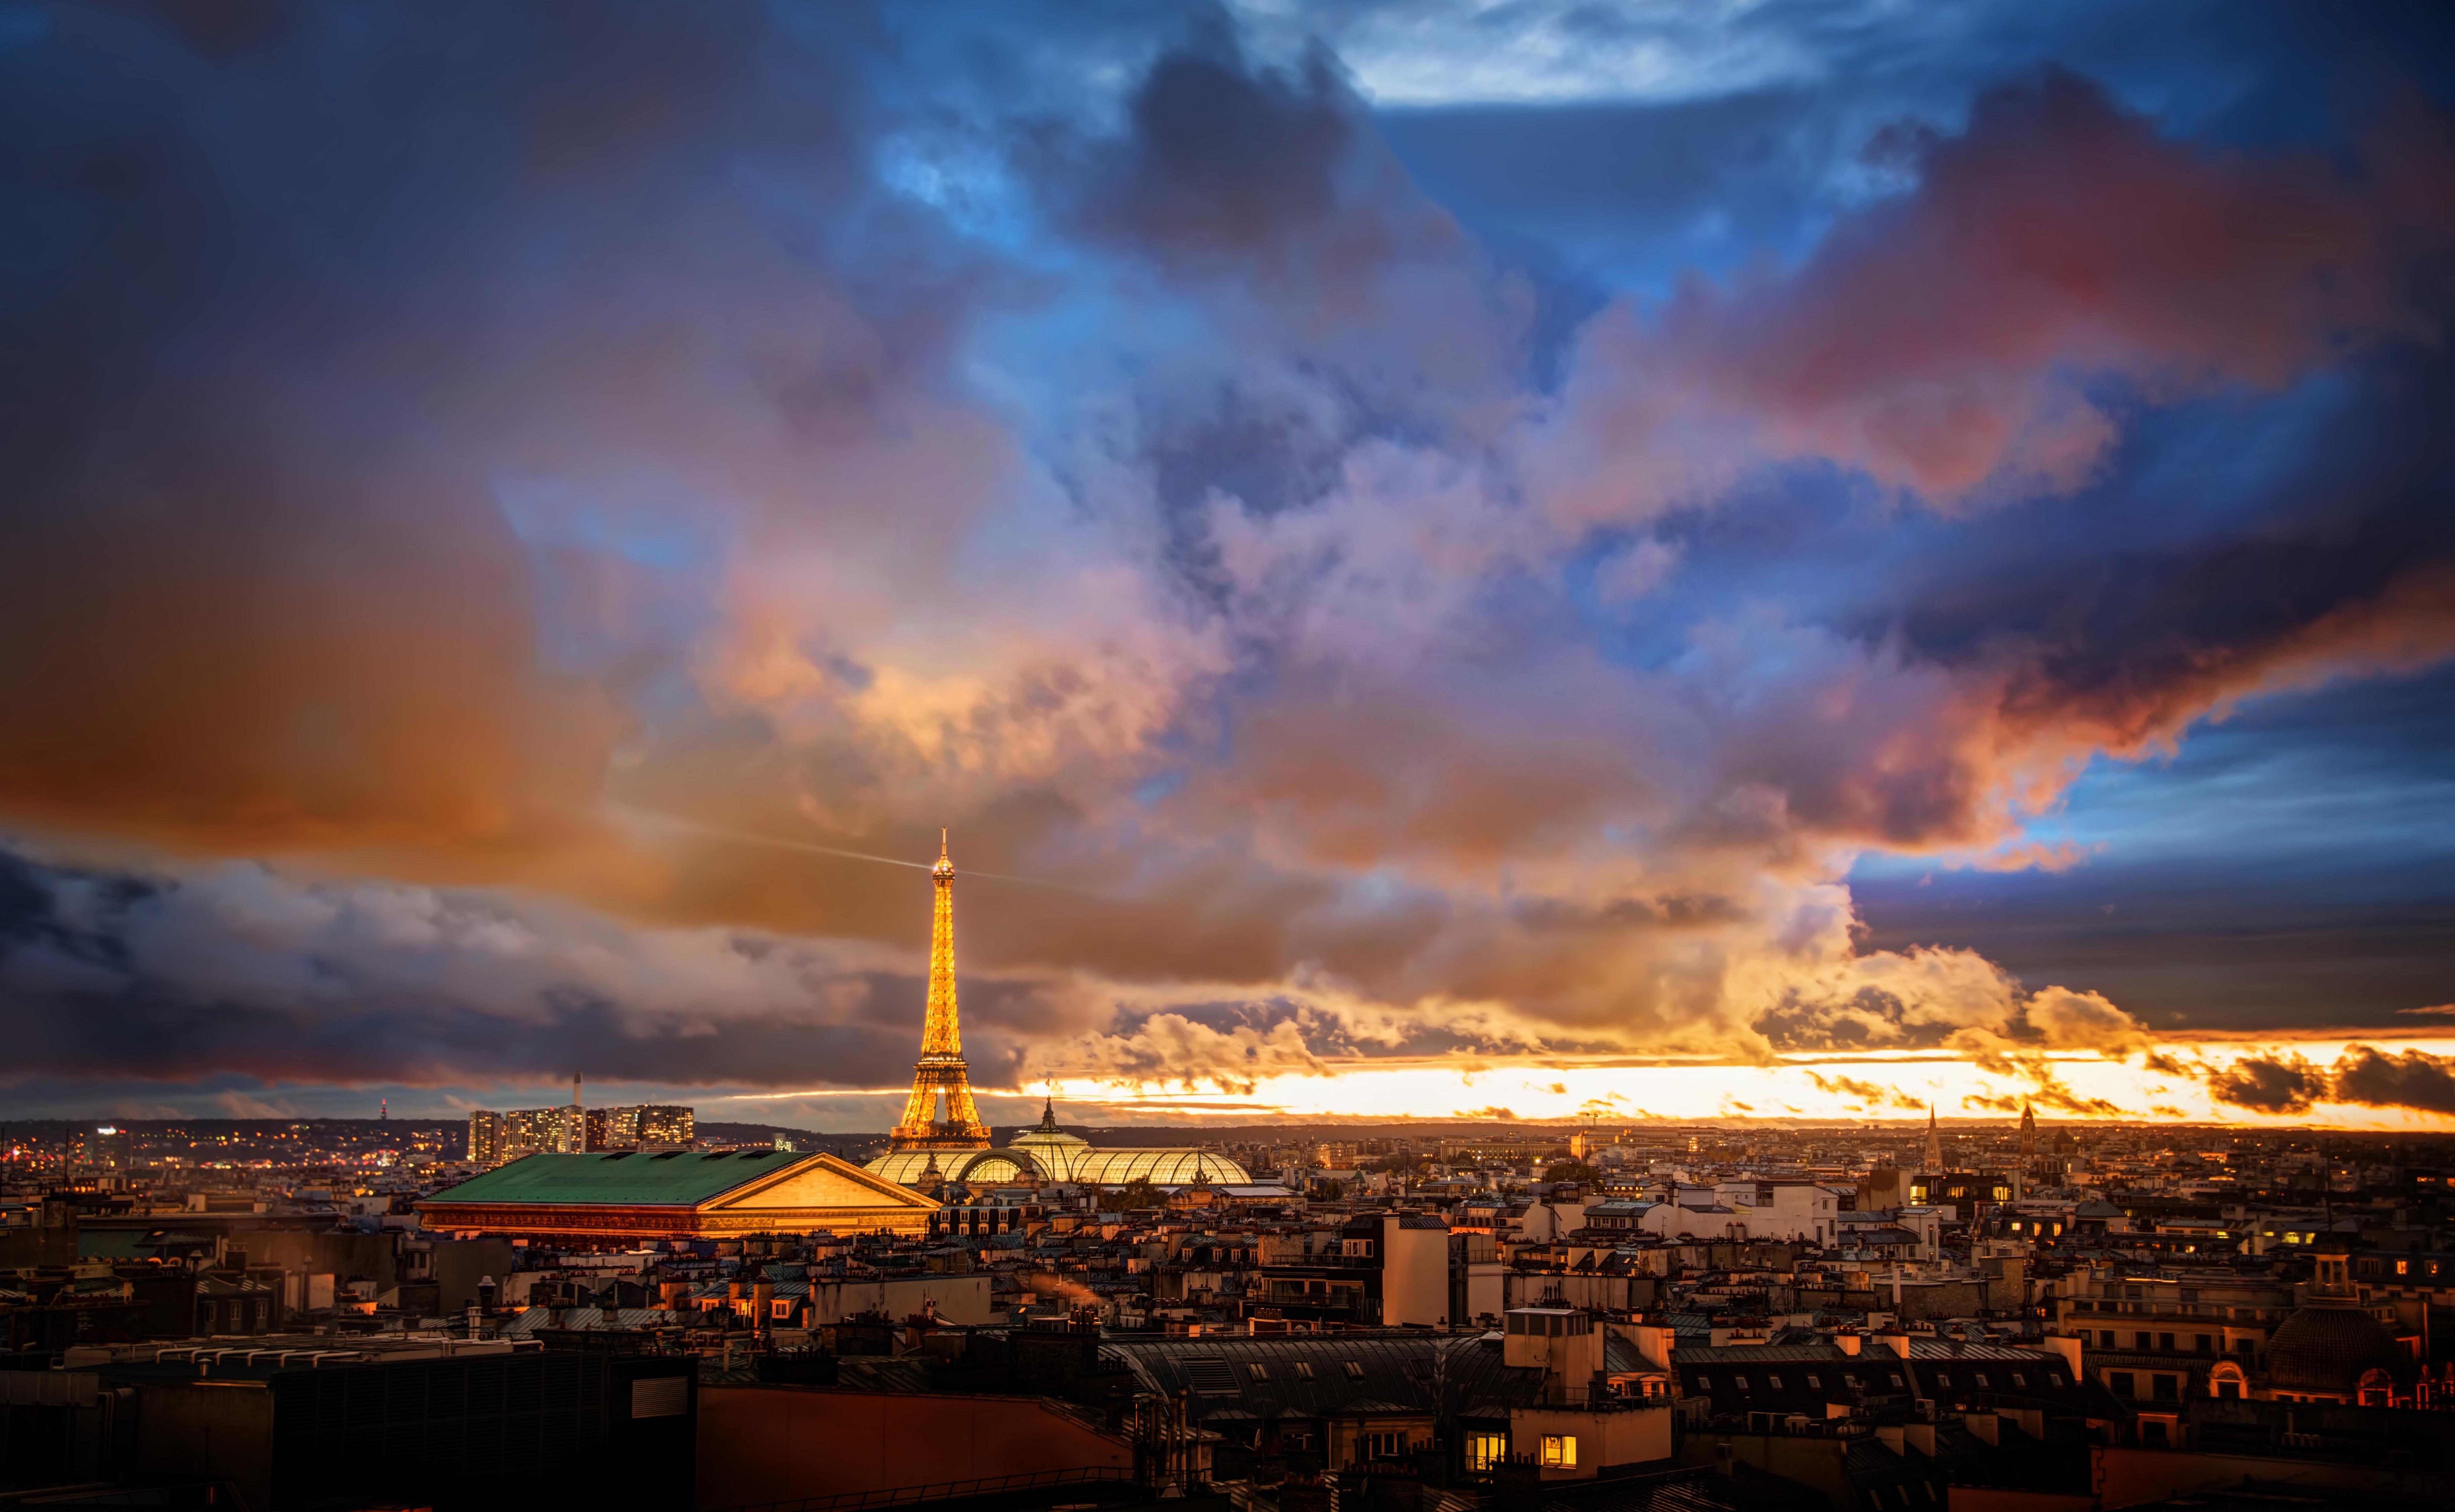 Sunset Over Paris, HD World, 4k Wallpaper, Image, Background